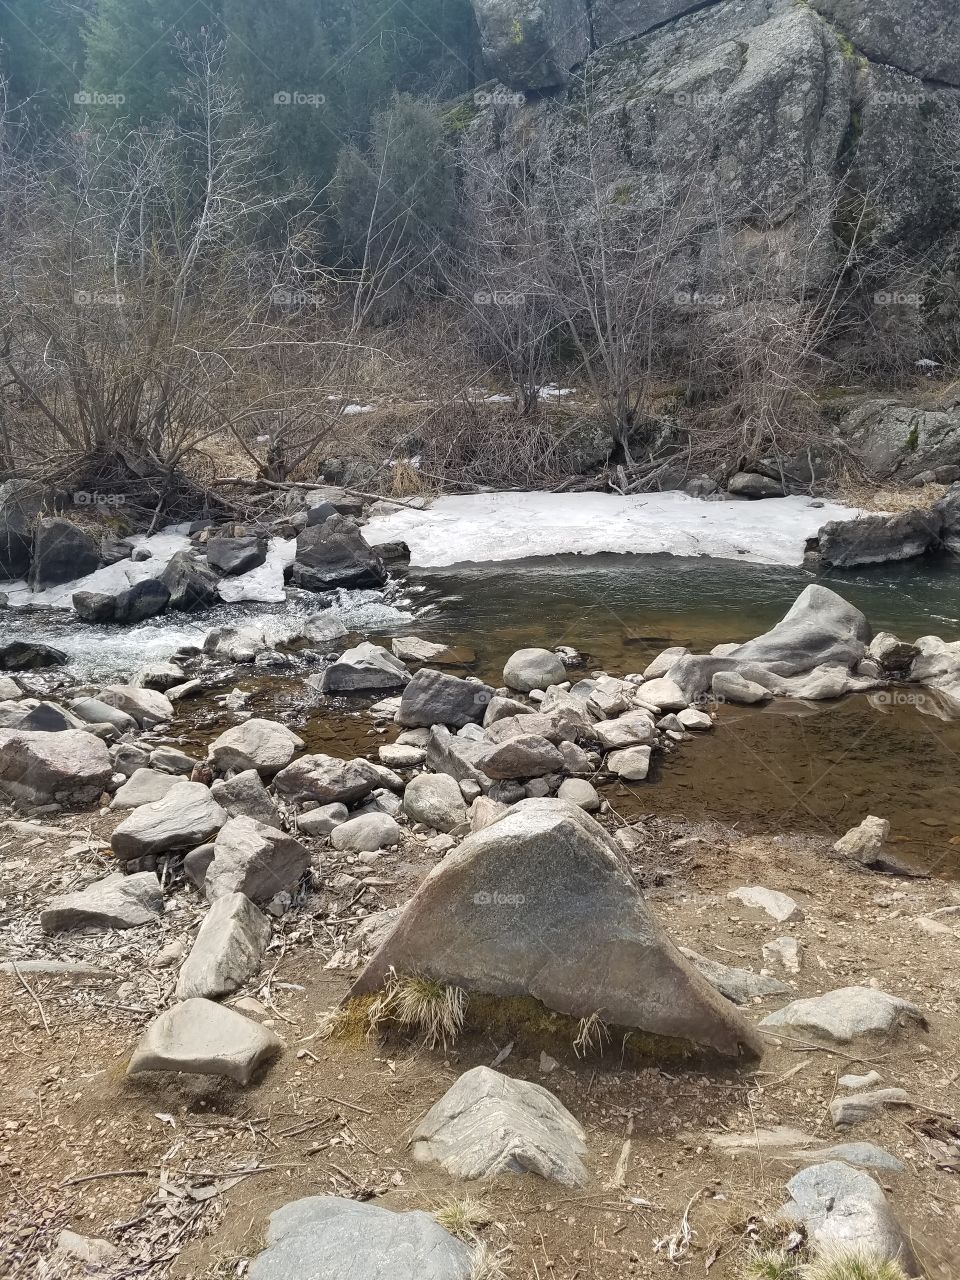 Spring hiking near calm, babbling river